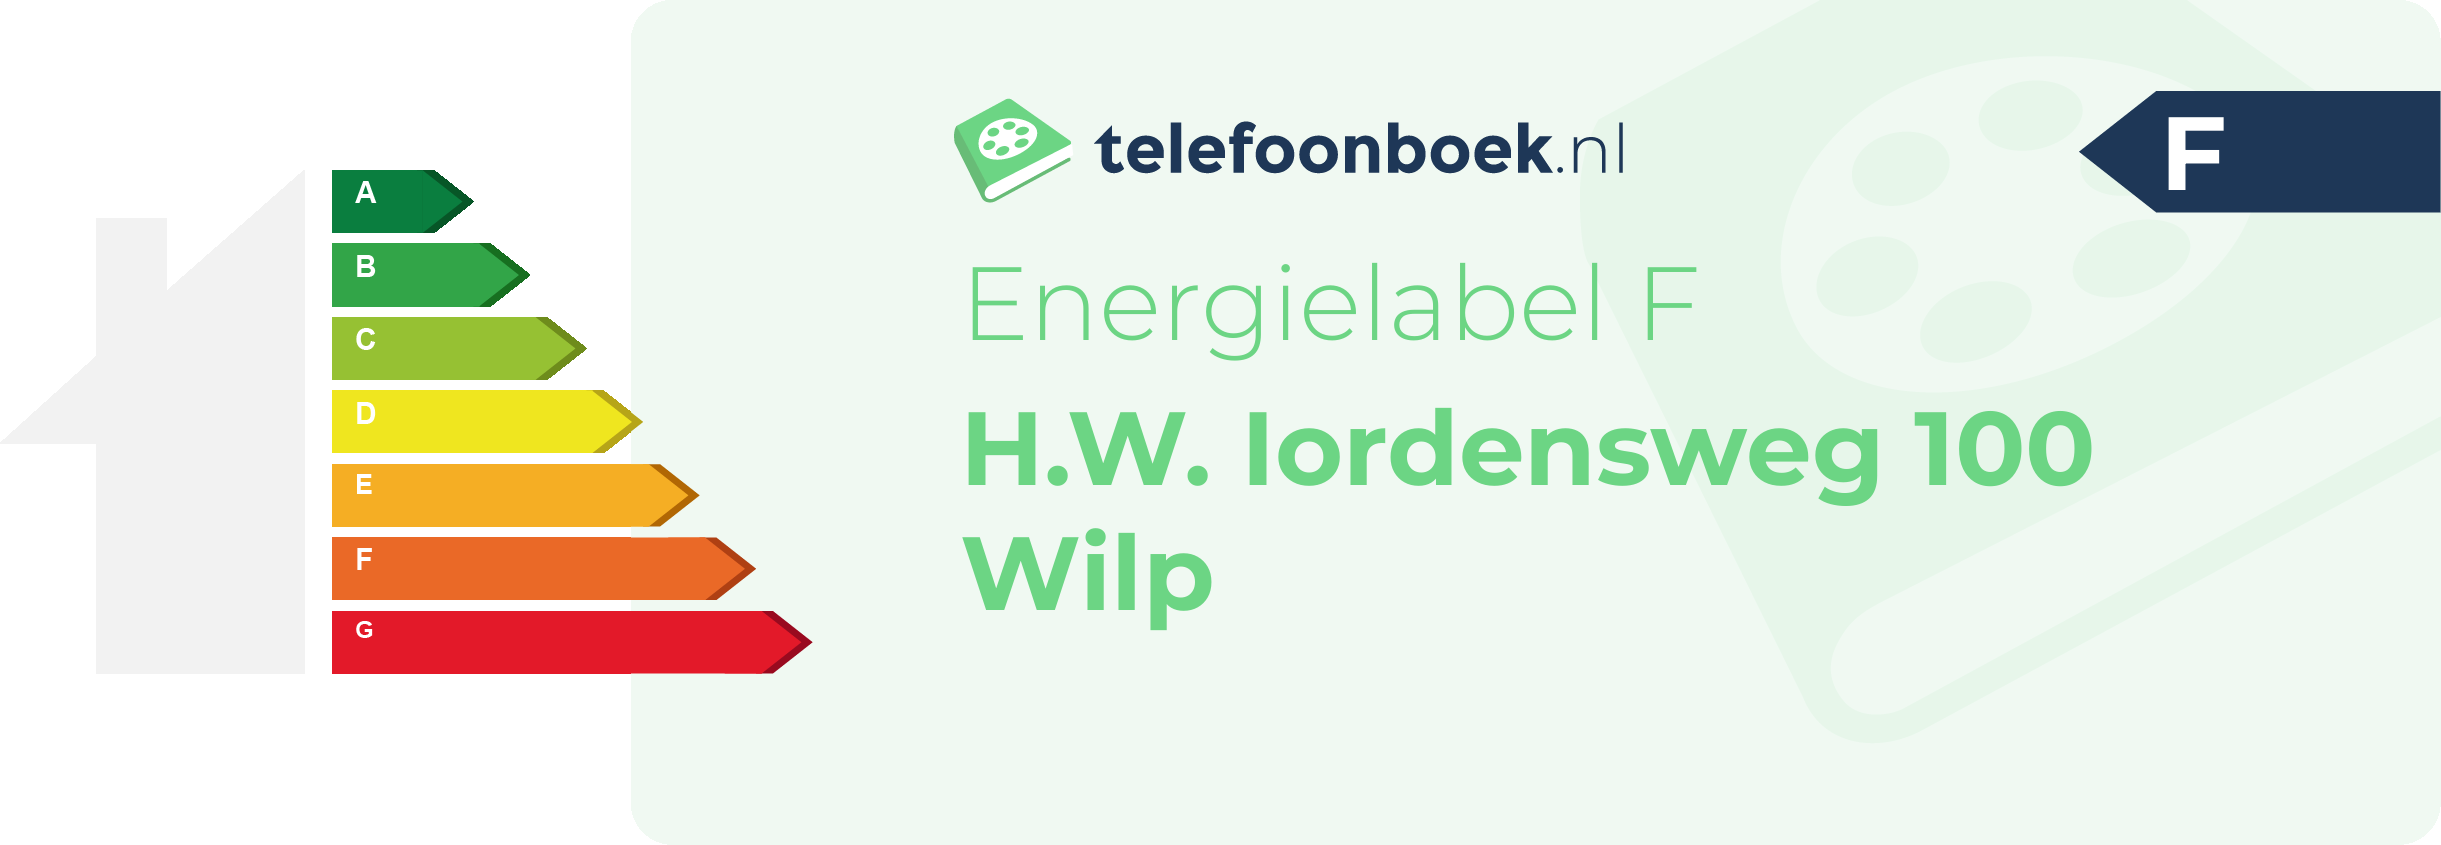 Energielabel H.W. Iordensweg 100 Wilp